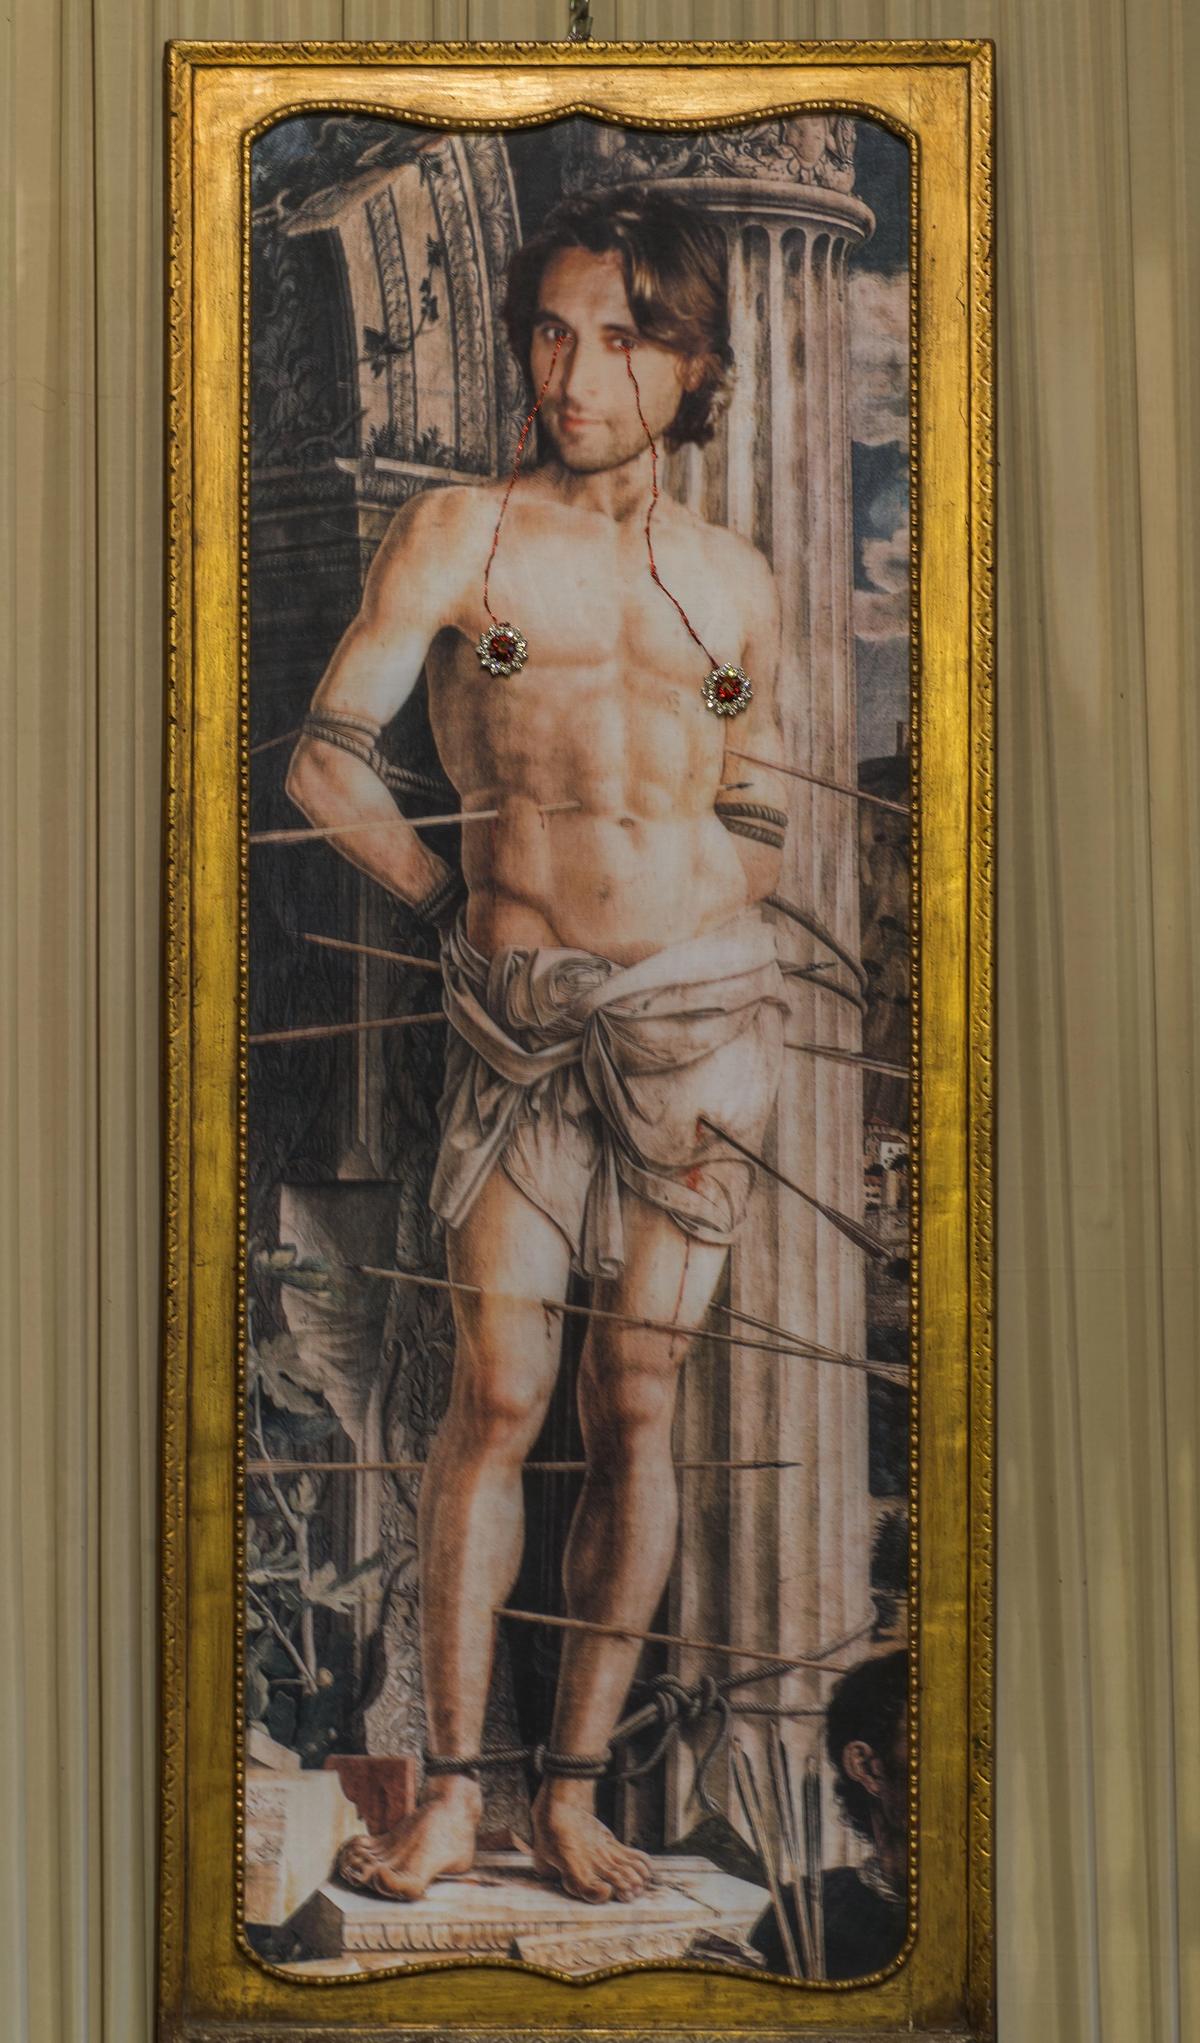 Francesco Vezzoli, Selfie Sebastian (Self-portrait as Saint Sebastian by Andrea Mantegna), 2009-14

courtesy the artist and APALAZZOGALLERY